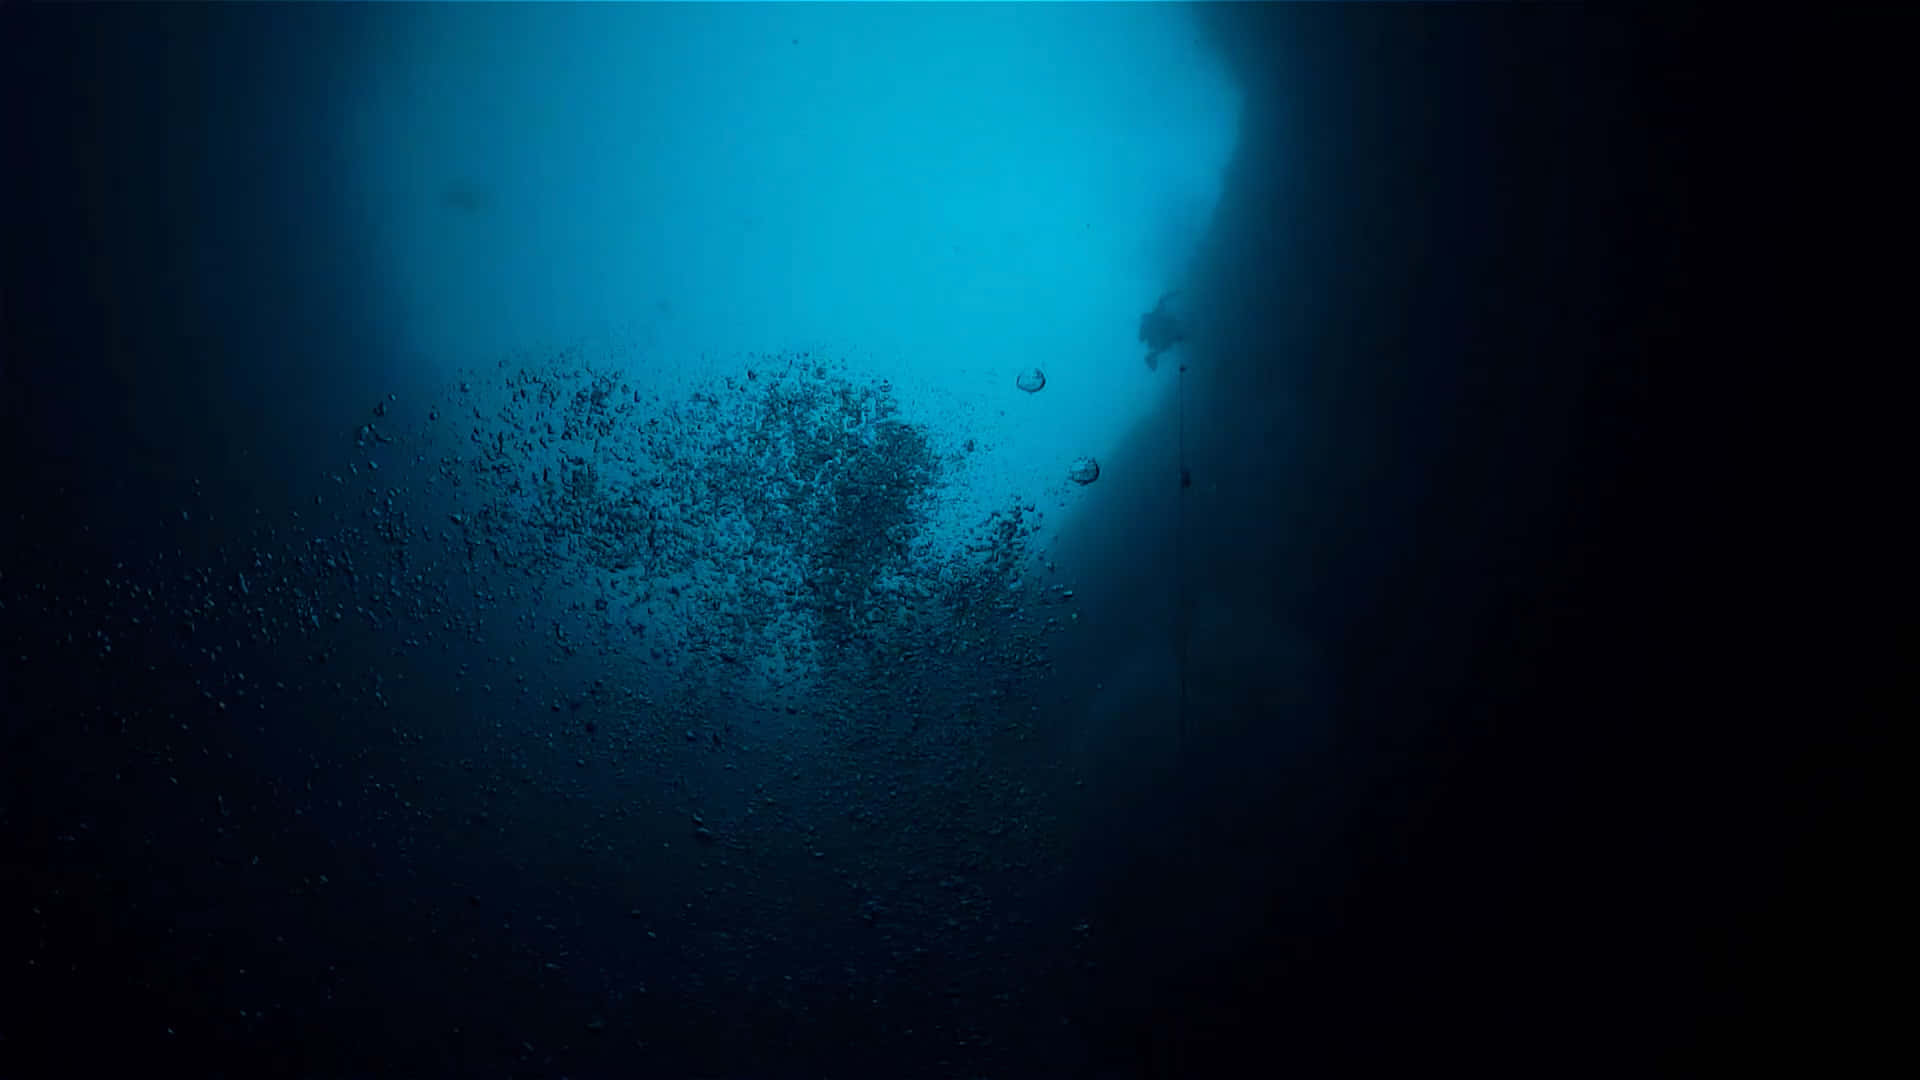 An eerie underwater scene of a deep sea abyss.